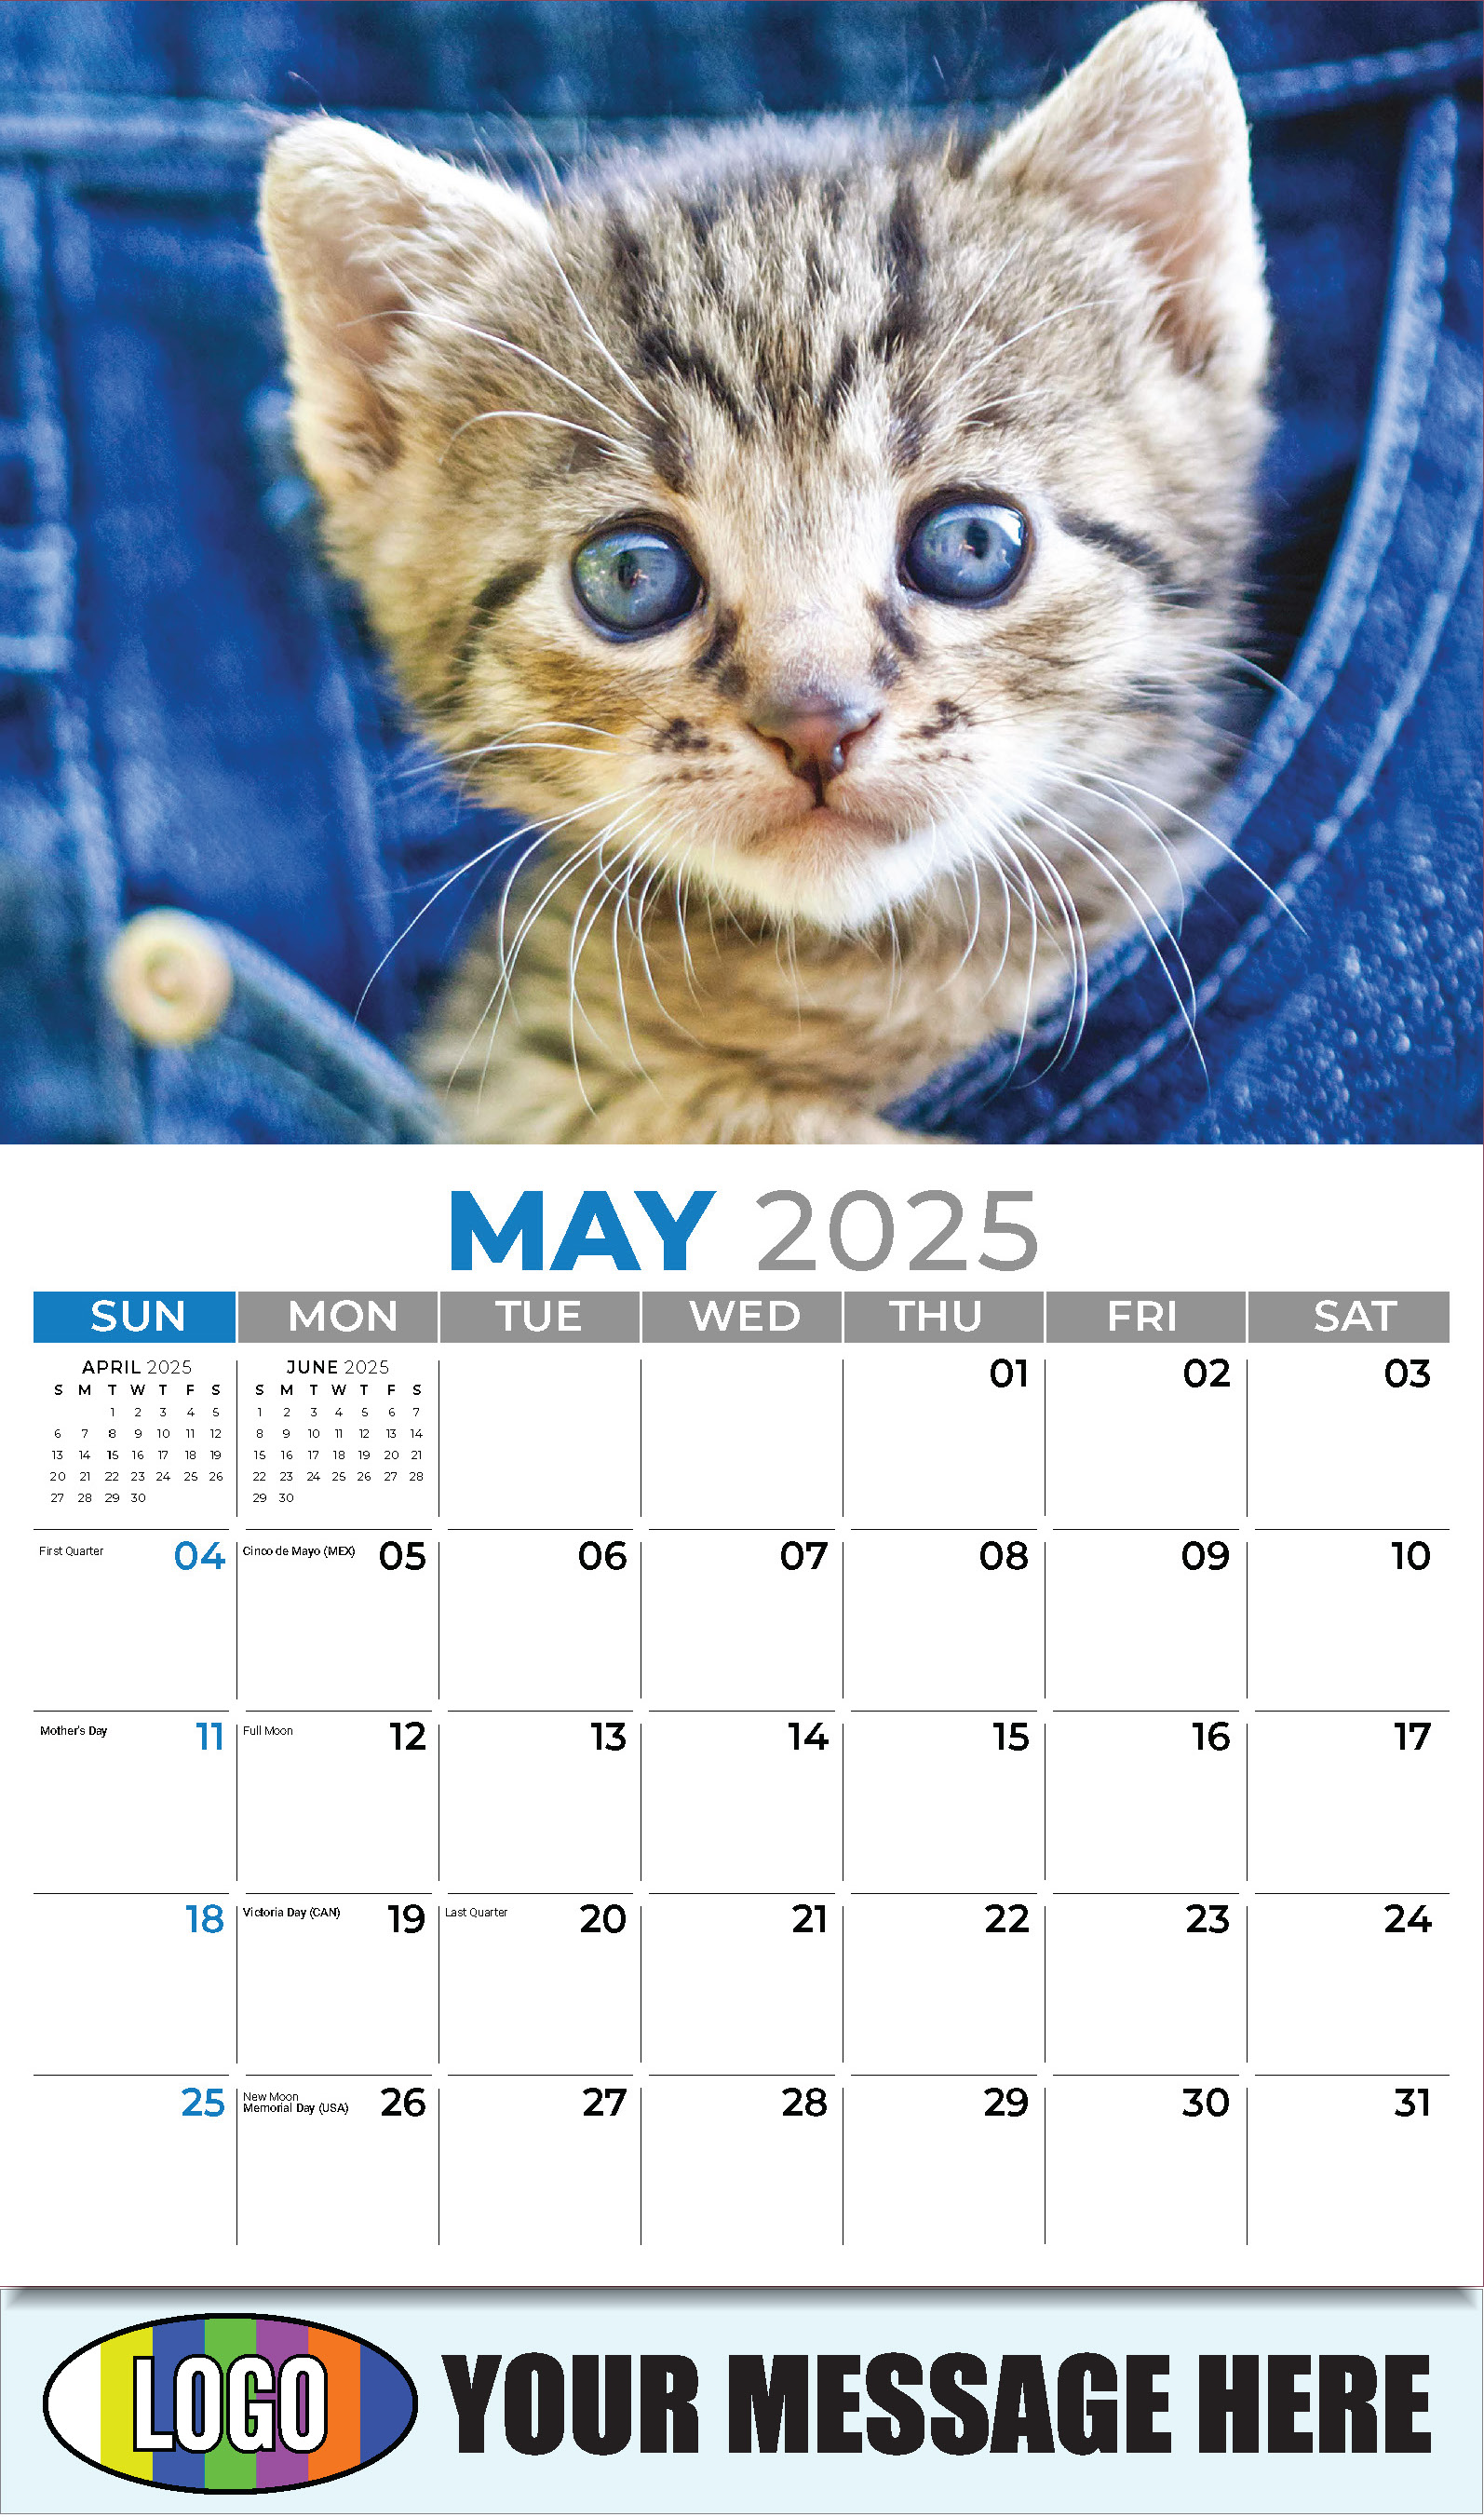 Kittens 2025 Business Promo Wall Calendar - May